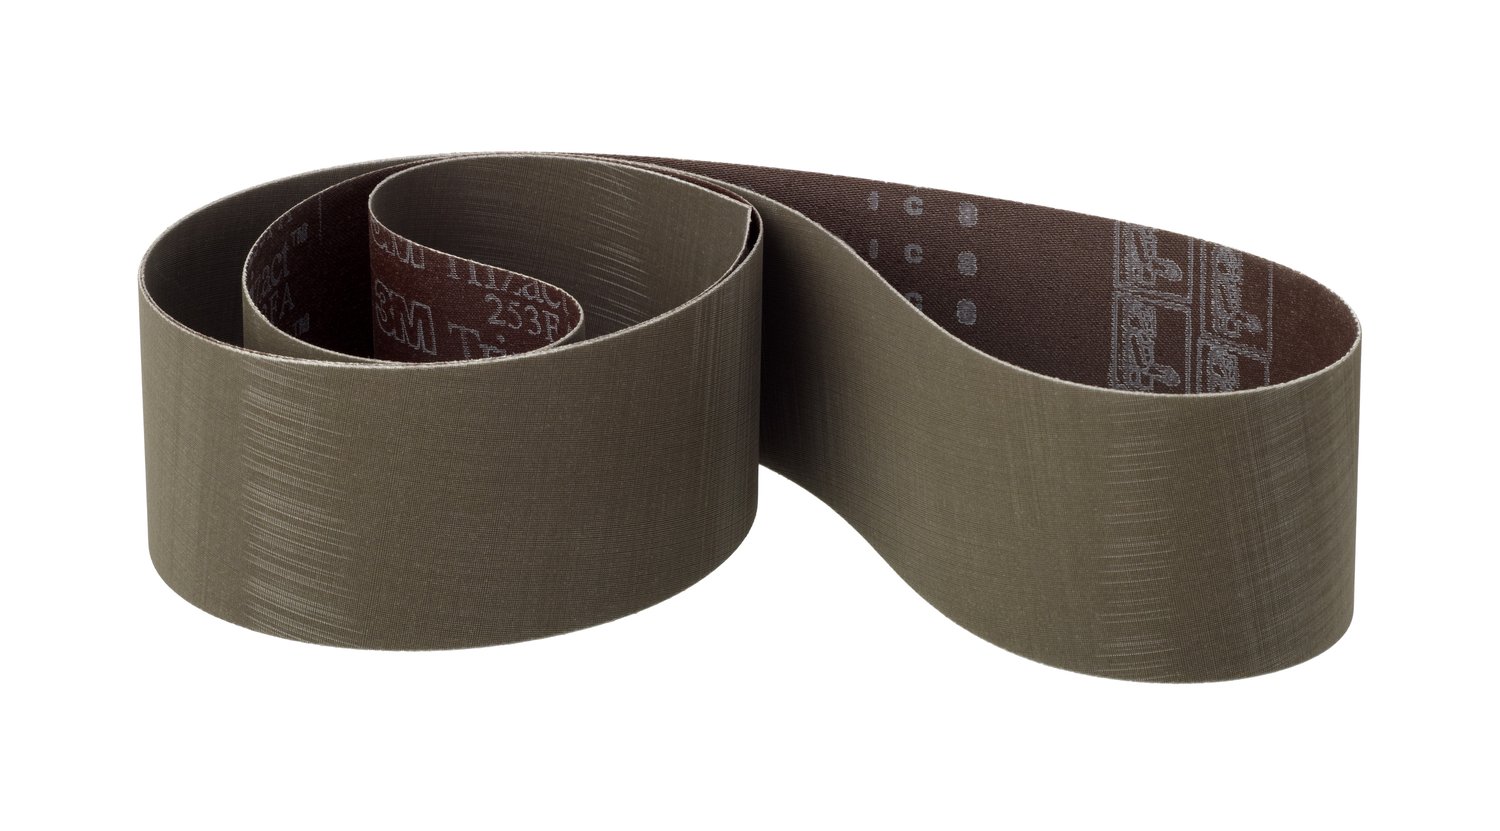 7100223511 - 3M Trizact Cloth Belt 253FA, A30 XF-weight, 19 in x 75 in, Film-lok,
Full-flex